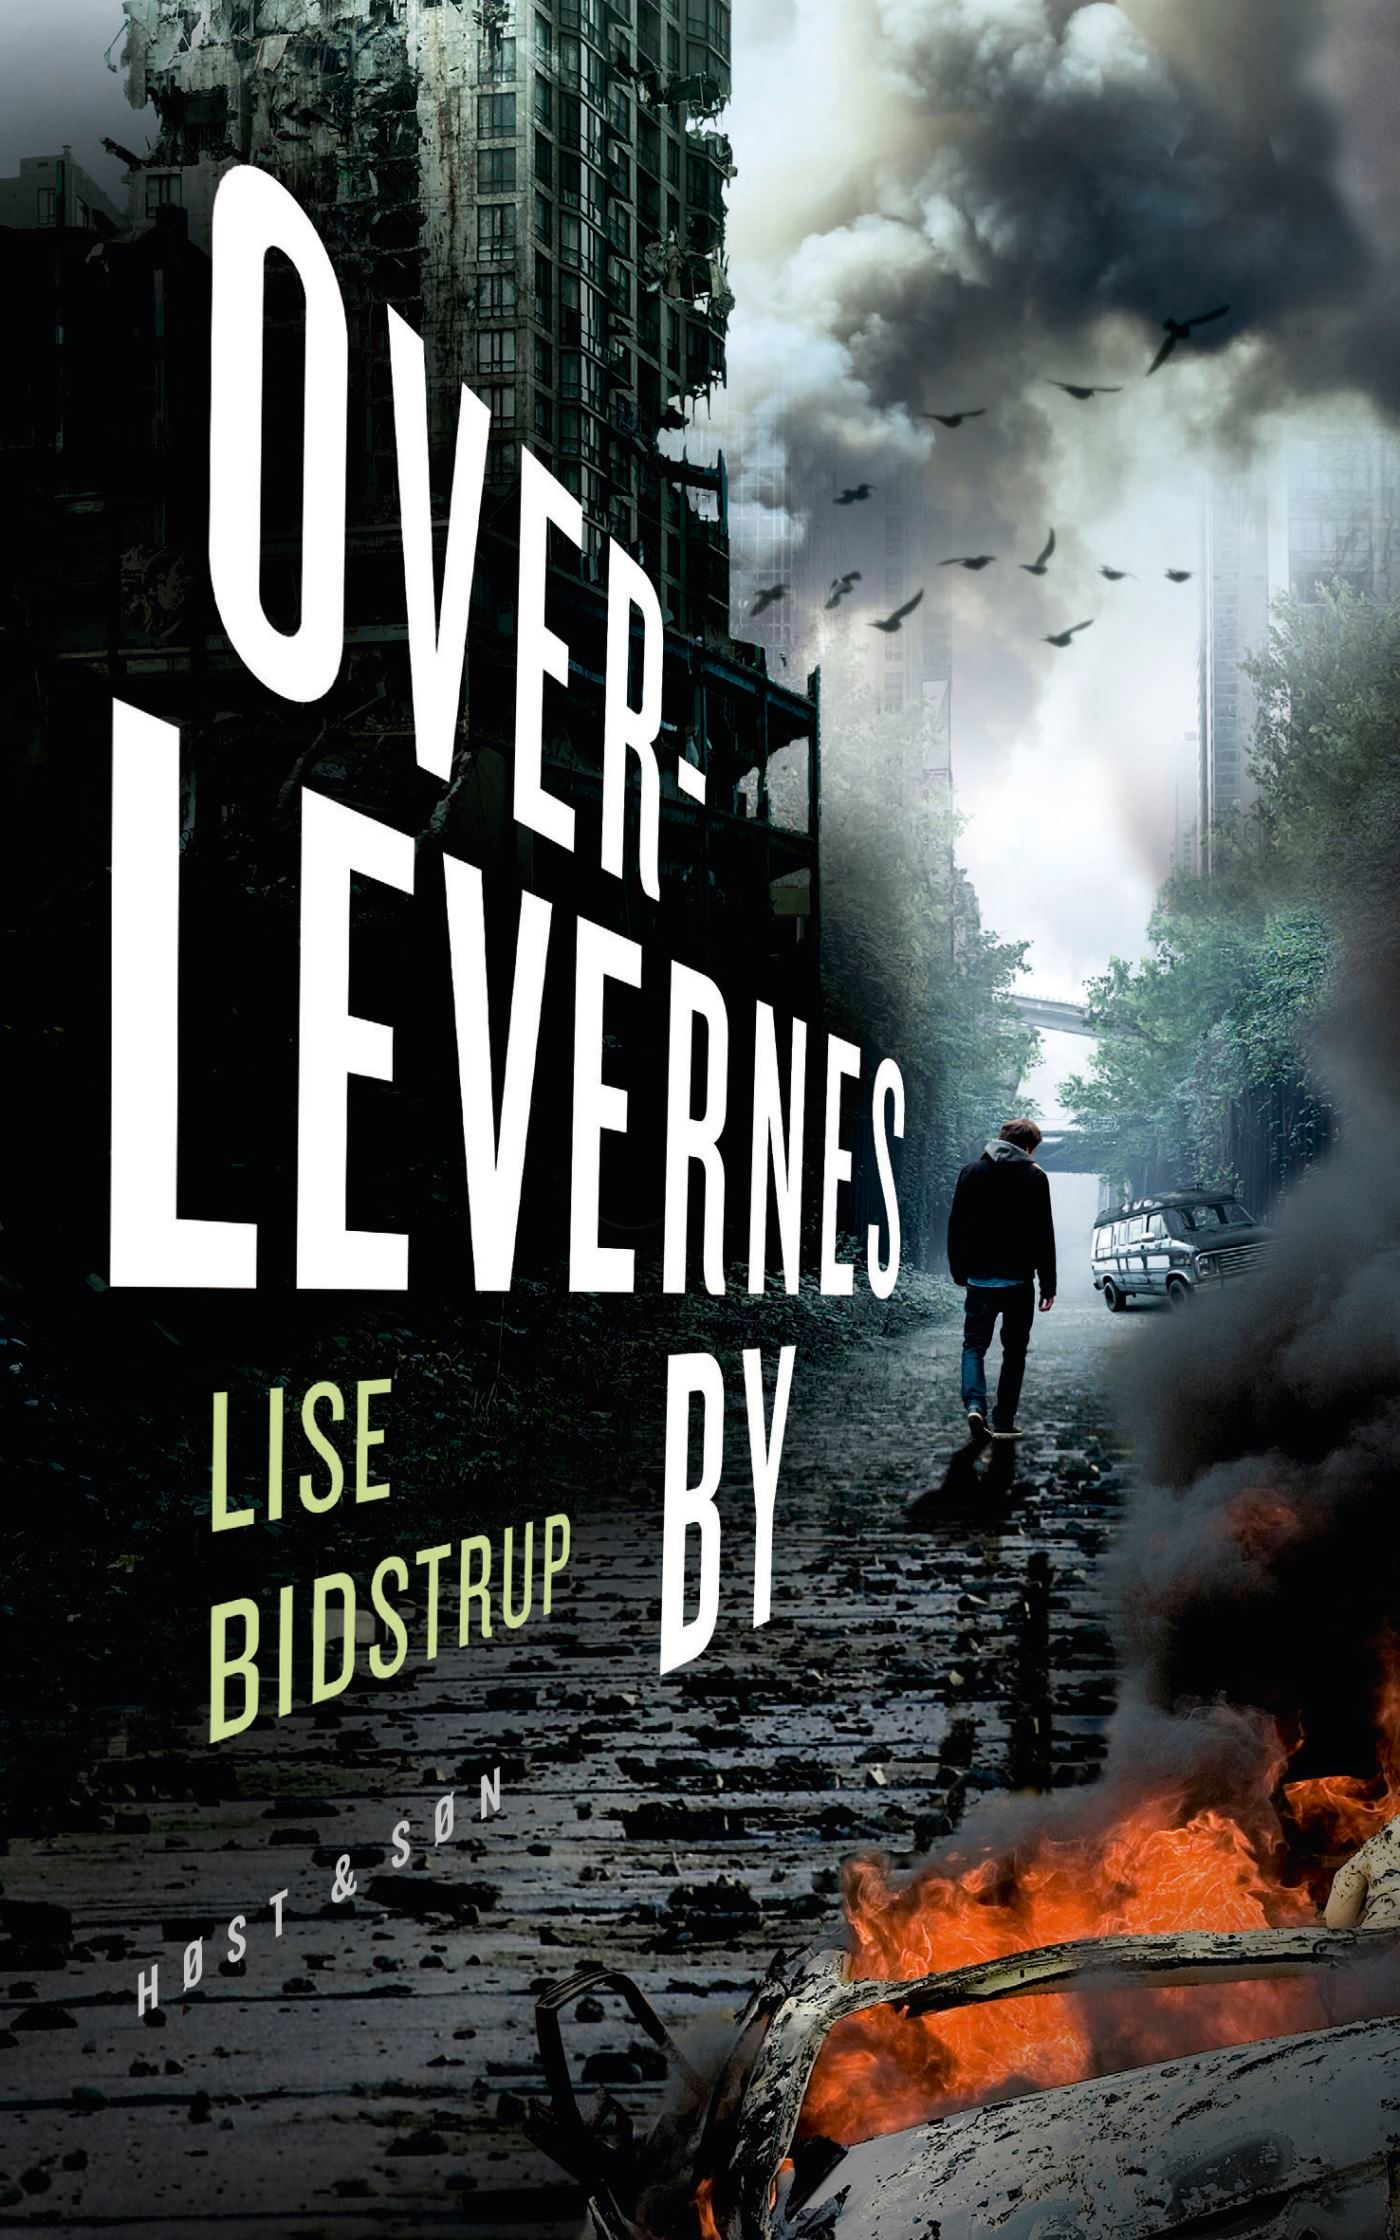 Overlevernes by, ljudbok av Lise Bidstrup